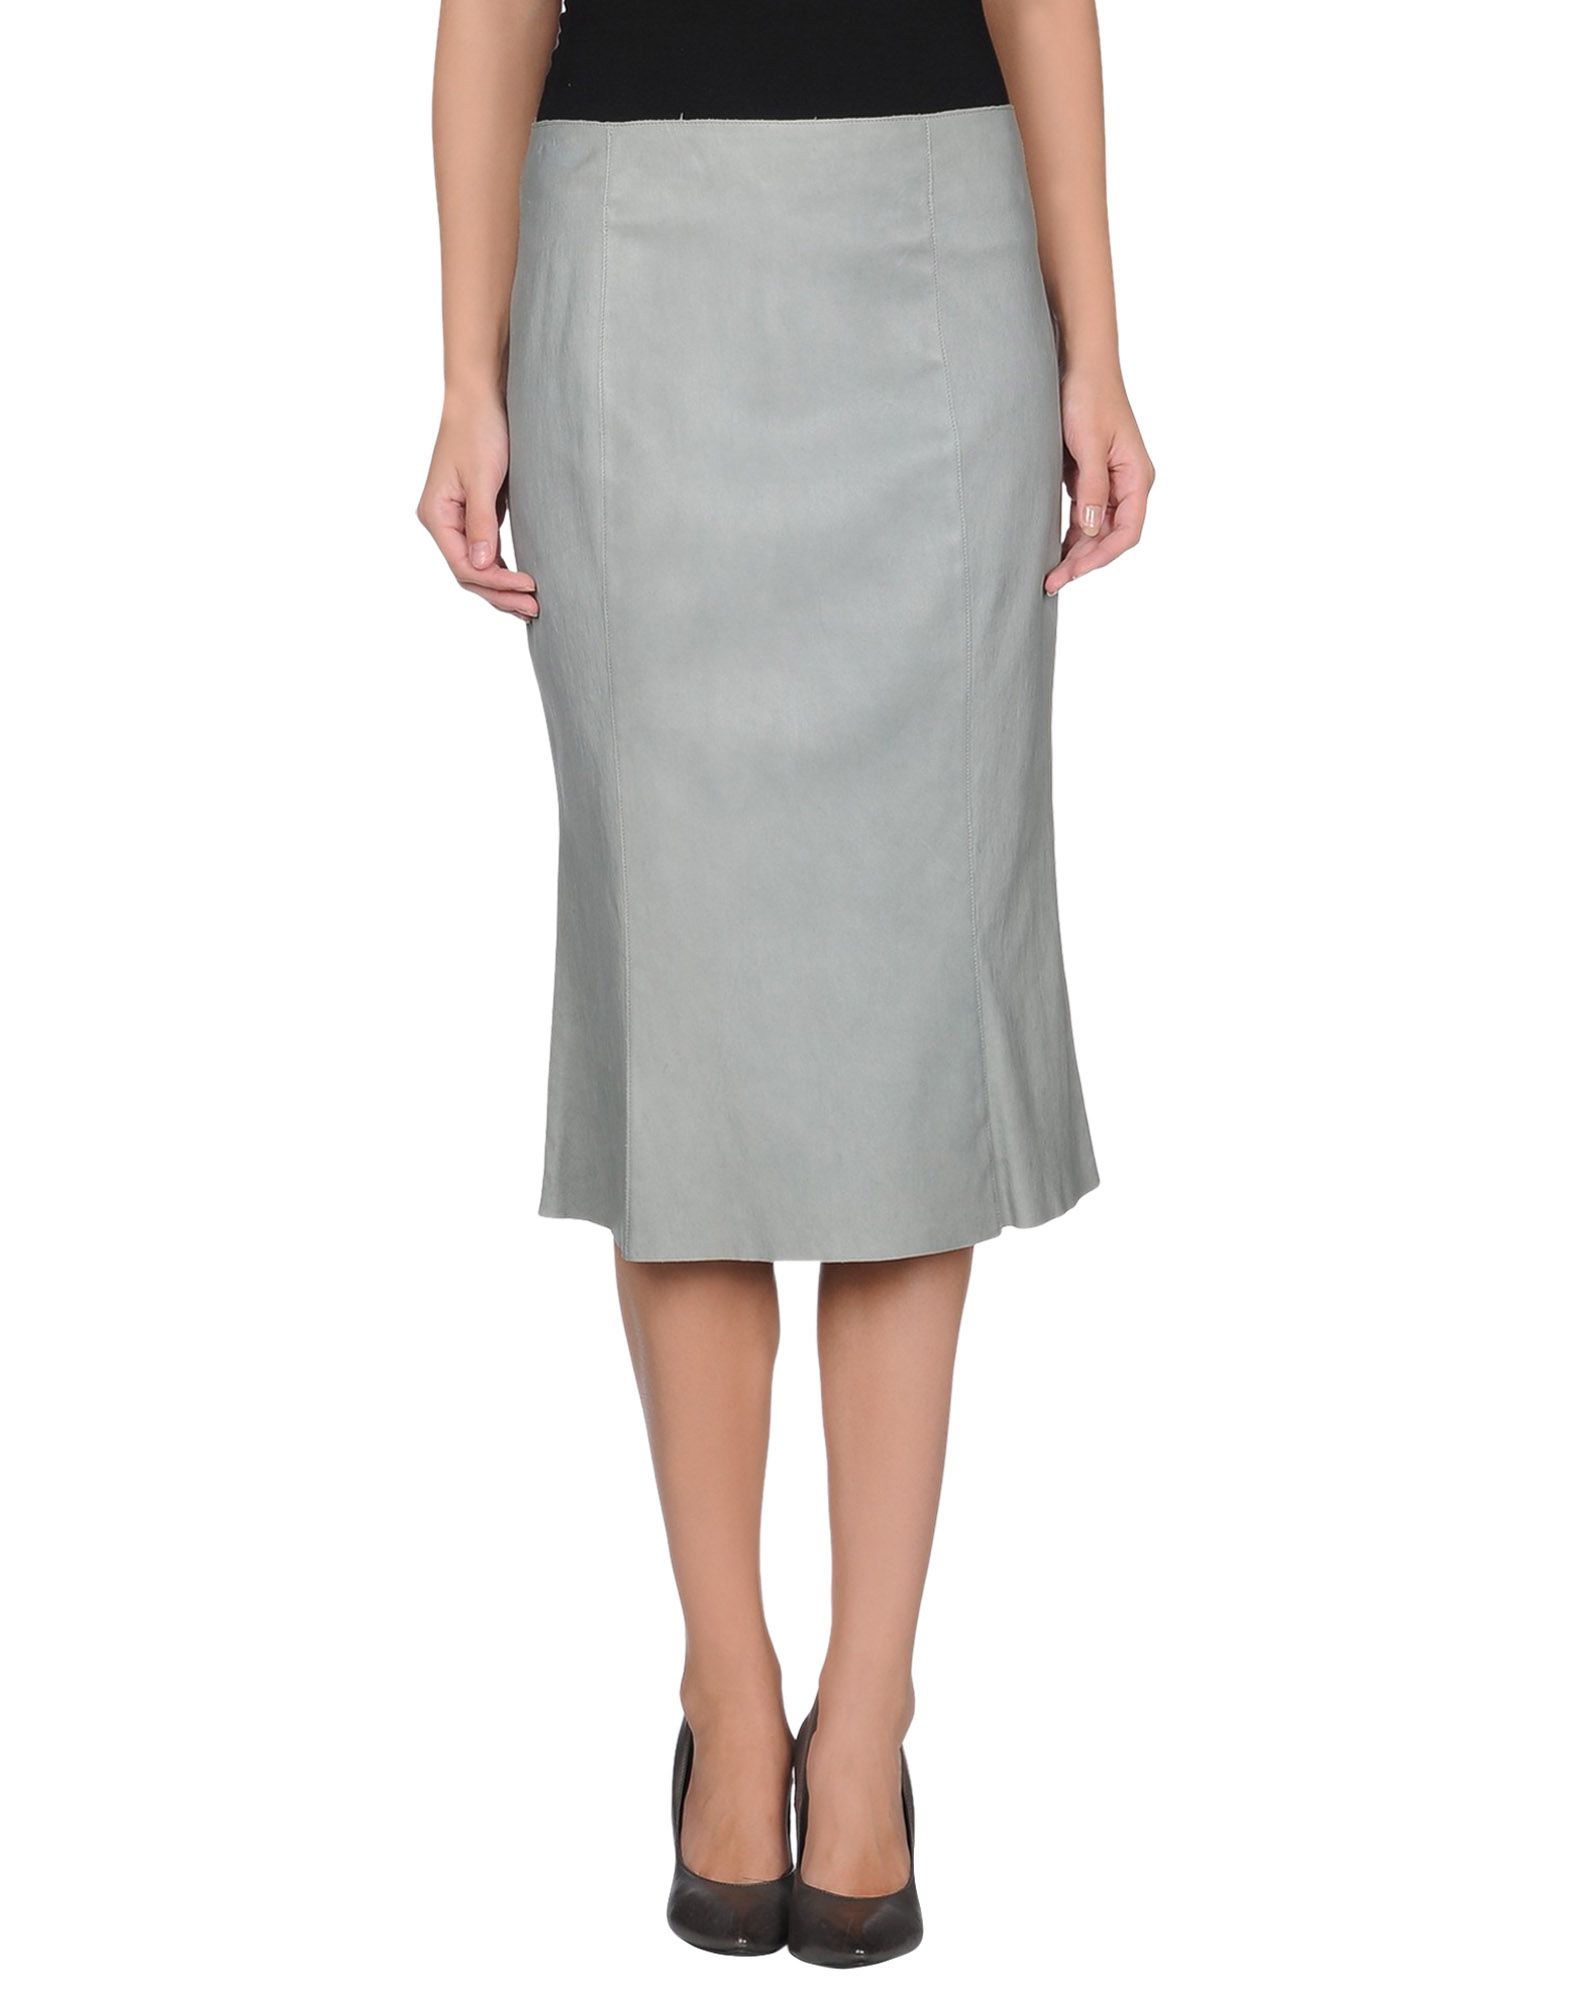 Lyst - Jitrois Leather Skirt in Gray